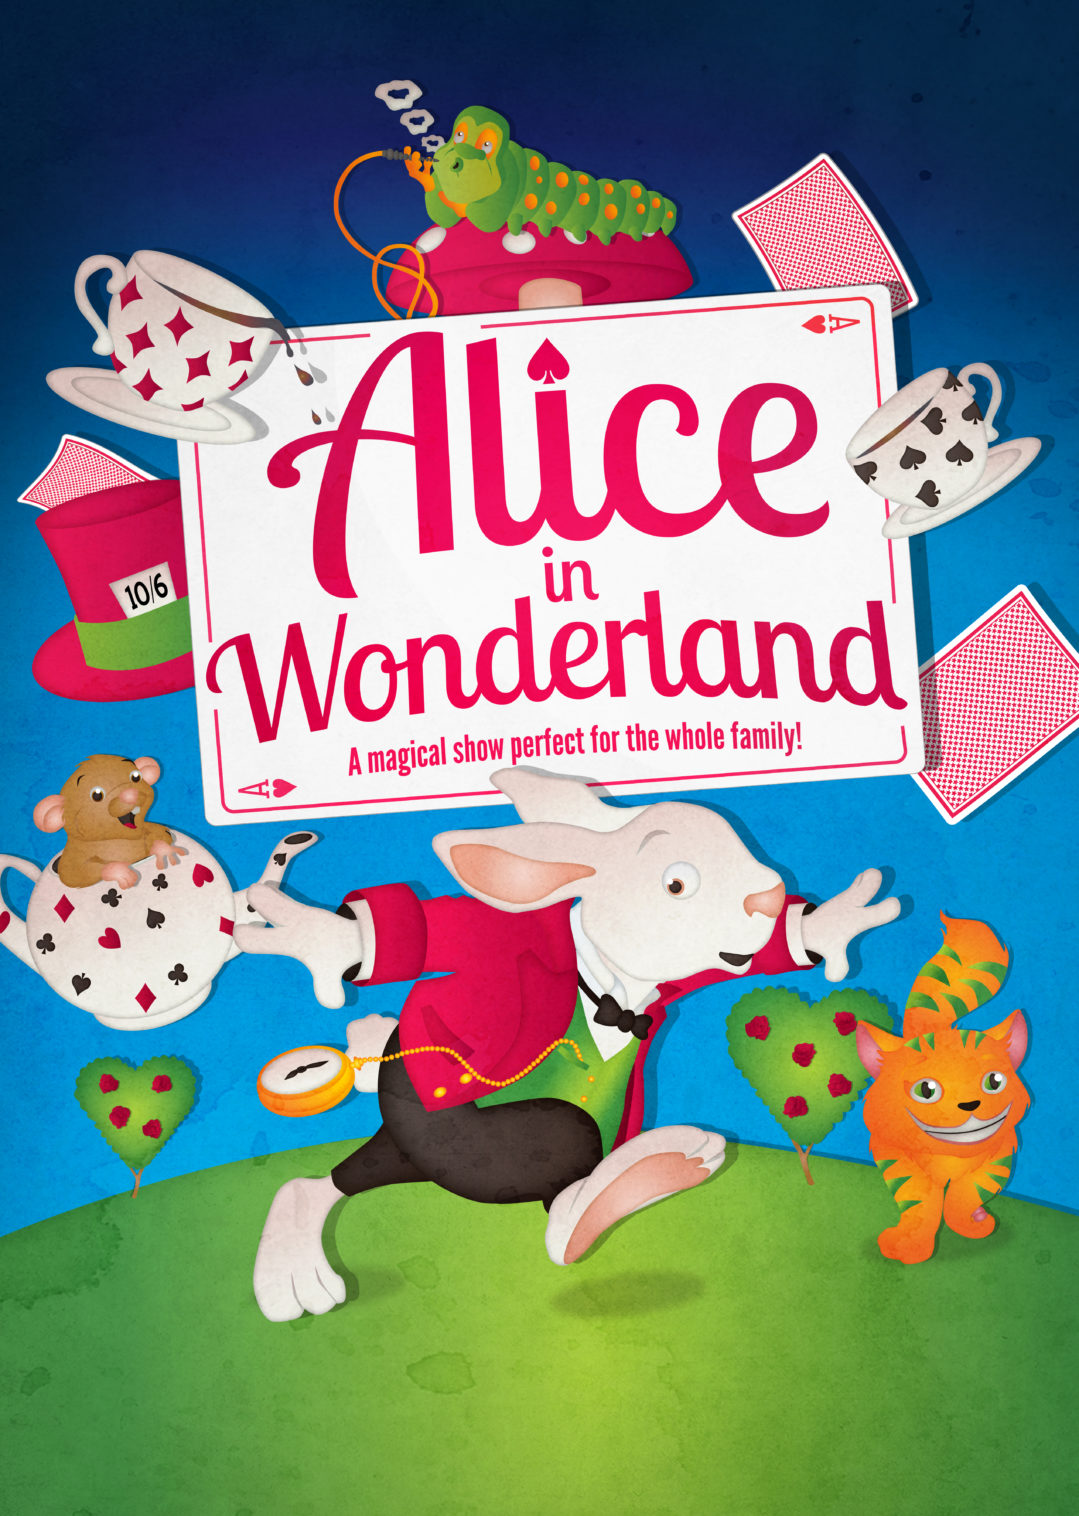 Alice in Wonderland 25th July 2019 - Birmingham Botanical Gardens